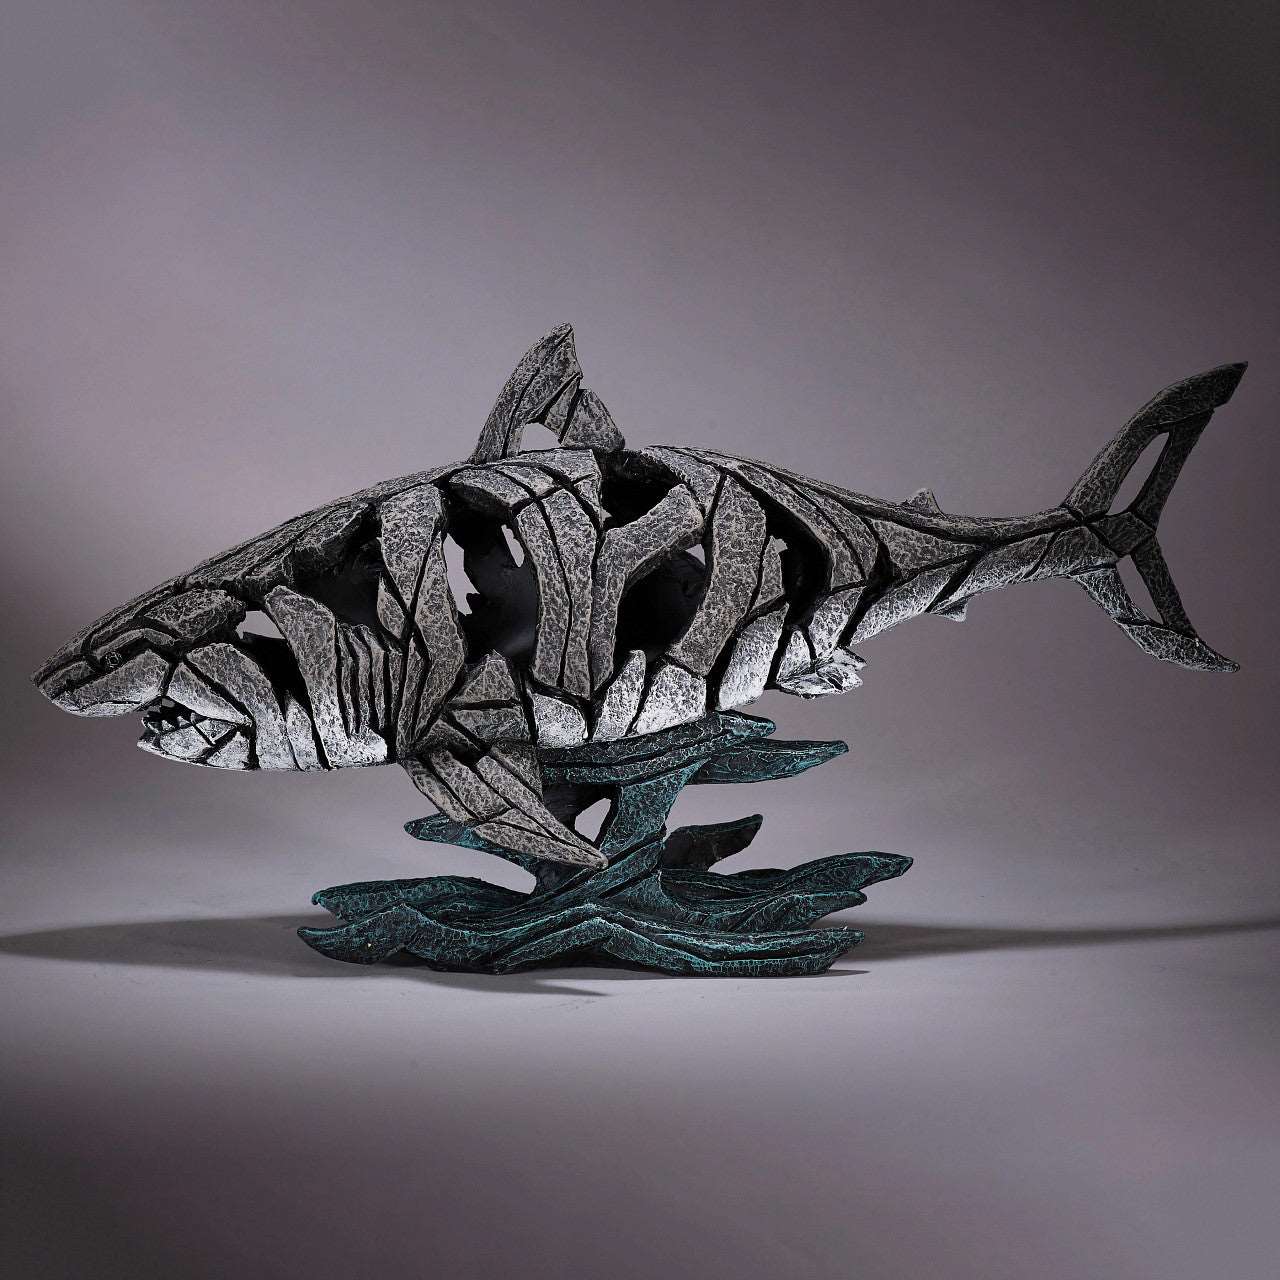 Abyssal Fury: Edge Sculpture Shark Figurine – 12.2-inch Height